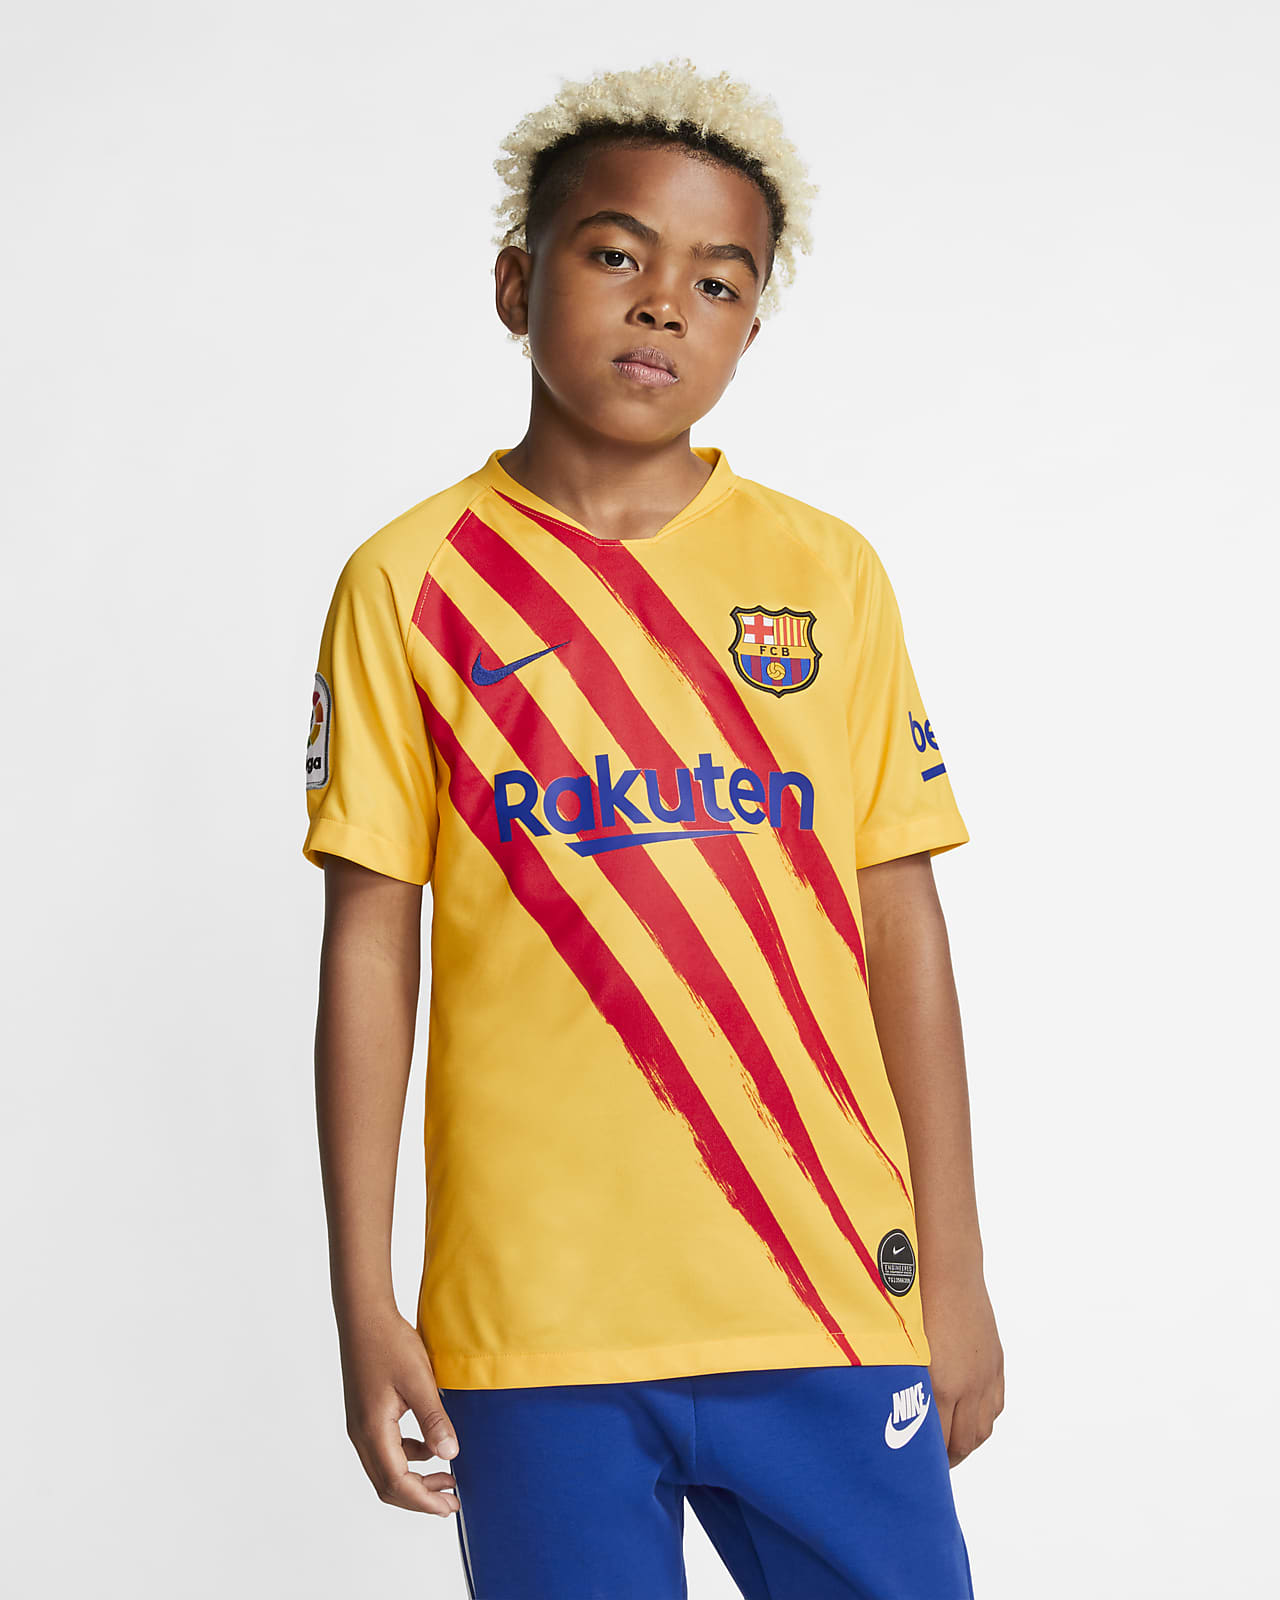 Método Christchurch radiador Cuarta equipación Stadium FC Barcelona Camiseta de fútbol - Niño/a. Nike ES